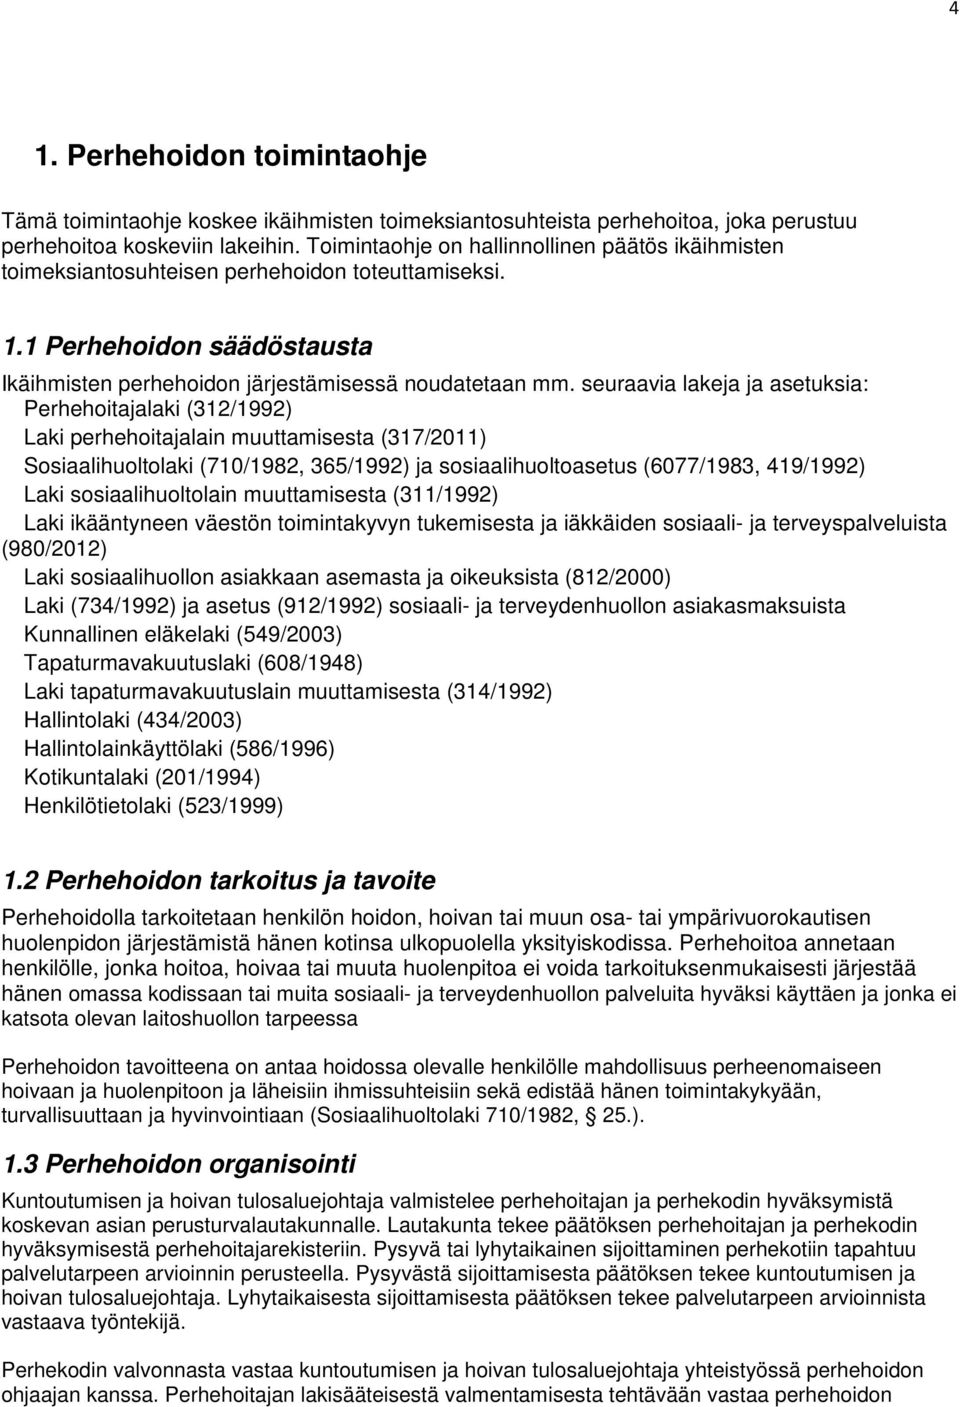 seuraavia lakeja ja asetuksia: Perhehoitajalaki (312/1992) Laki perhehoitajalain muuttamisesta (317/2011) Sosiaalihuoltolaki (710/1982, 365/1992) ja sosiaalihuoltoasetus (6077/1983, 419/1992) Laki